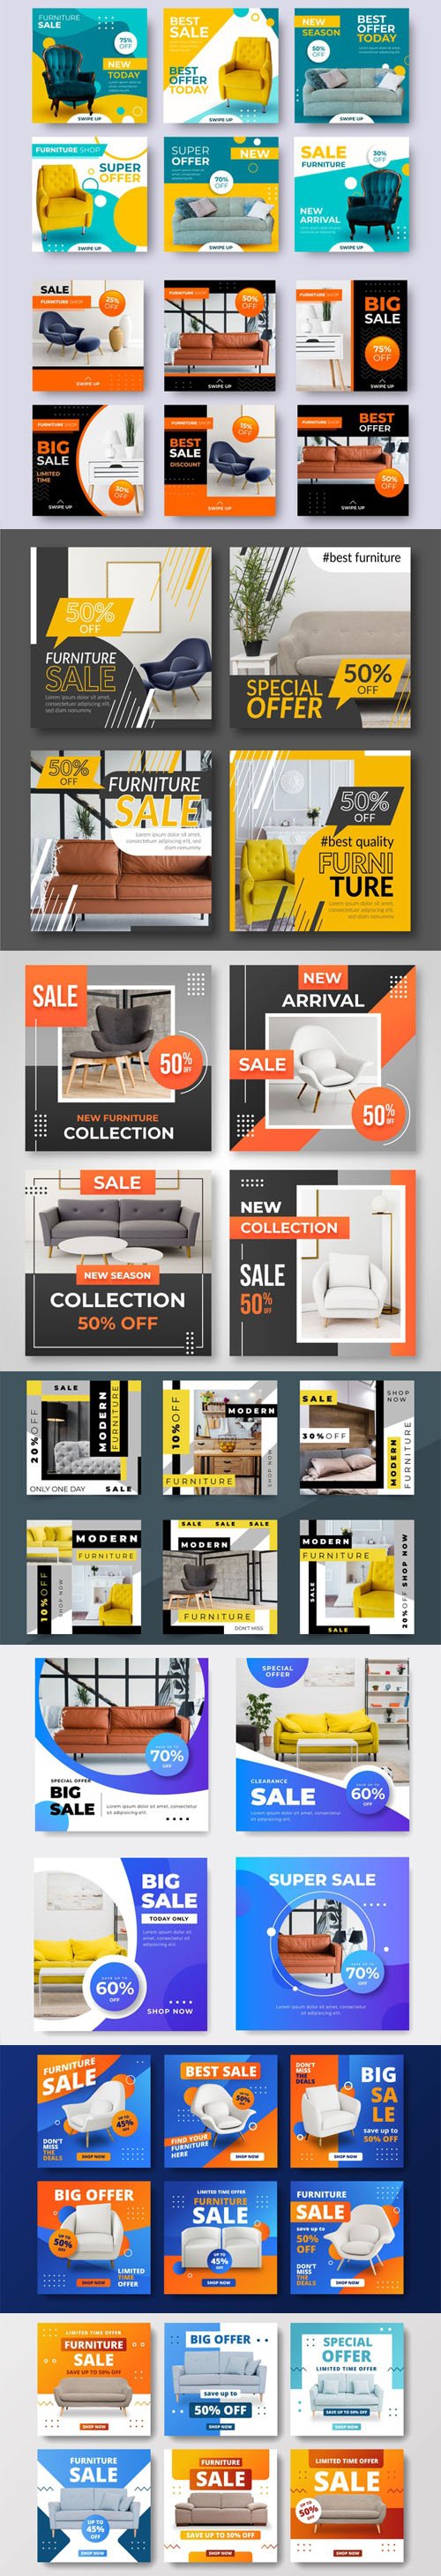 Furniture Sale Instagram Posts Vector Collection